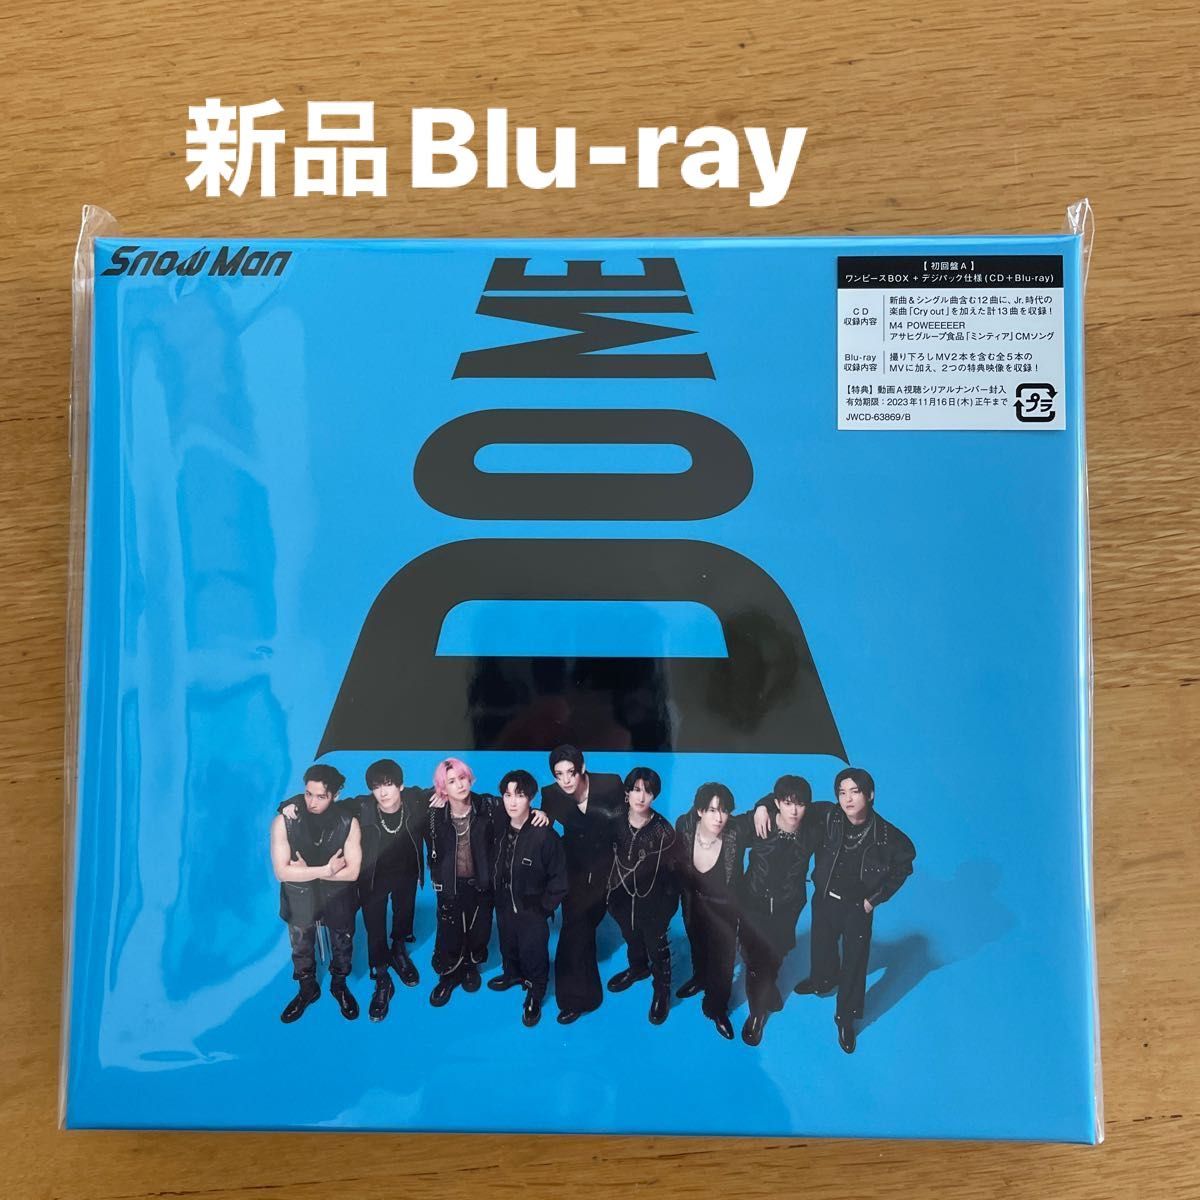 Snow Manアルバム i DO ME CD+Blu-ray 初回盤A 新品 スノーマン｜Yahoo